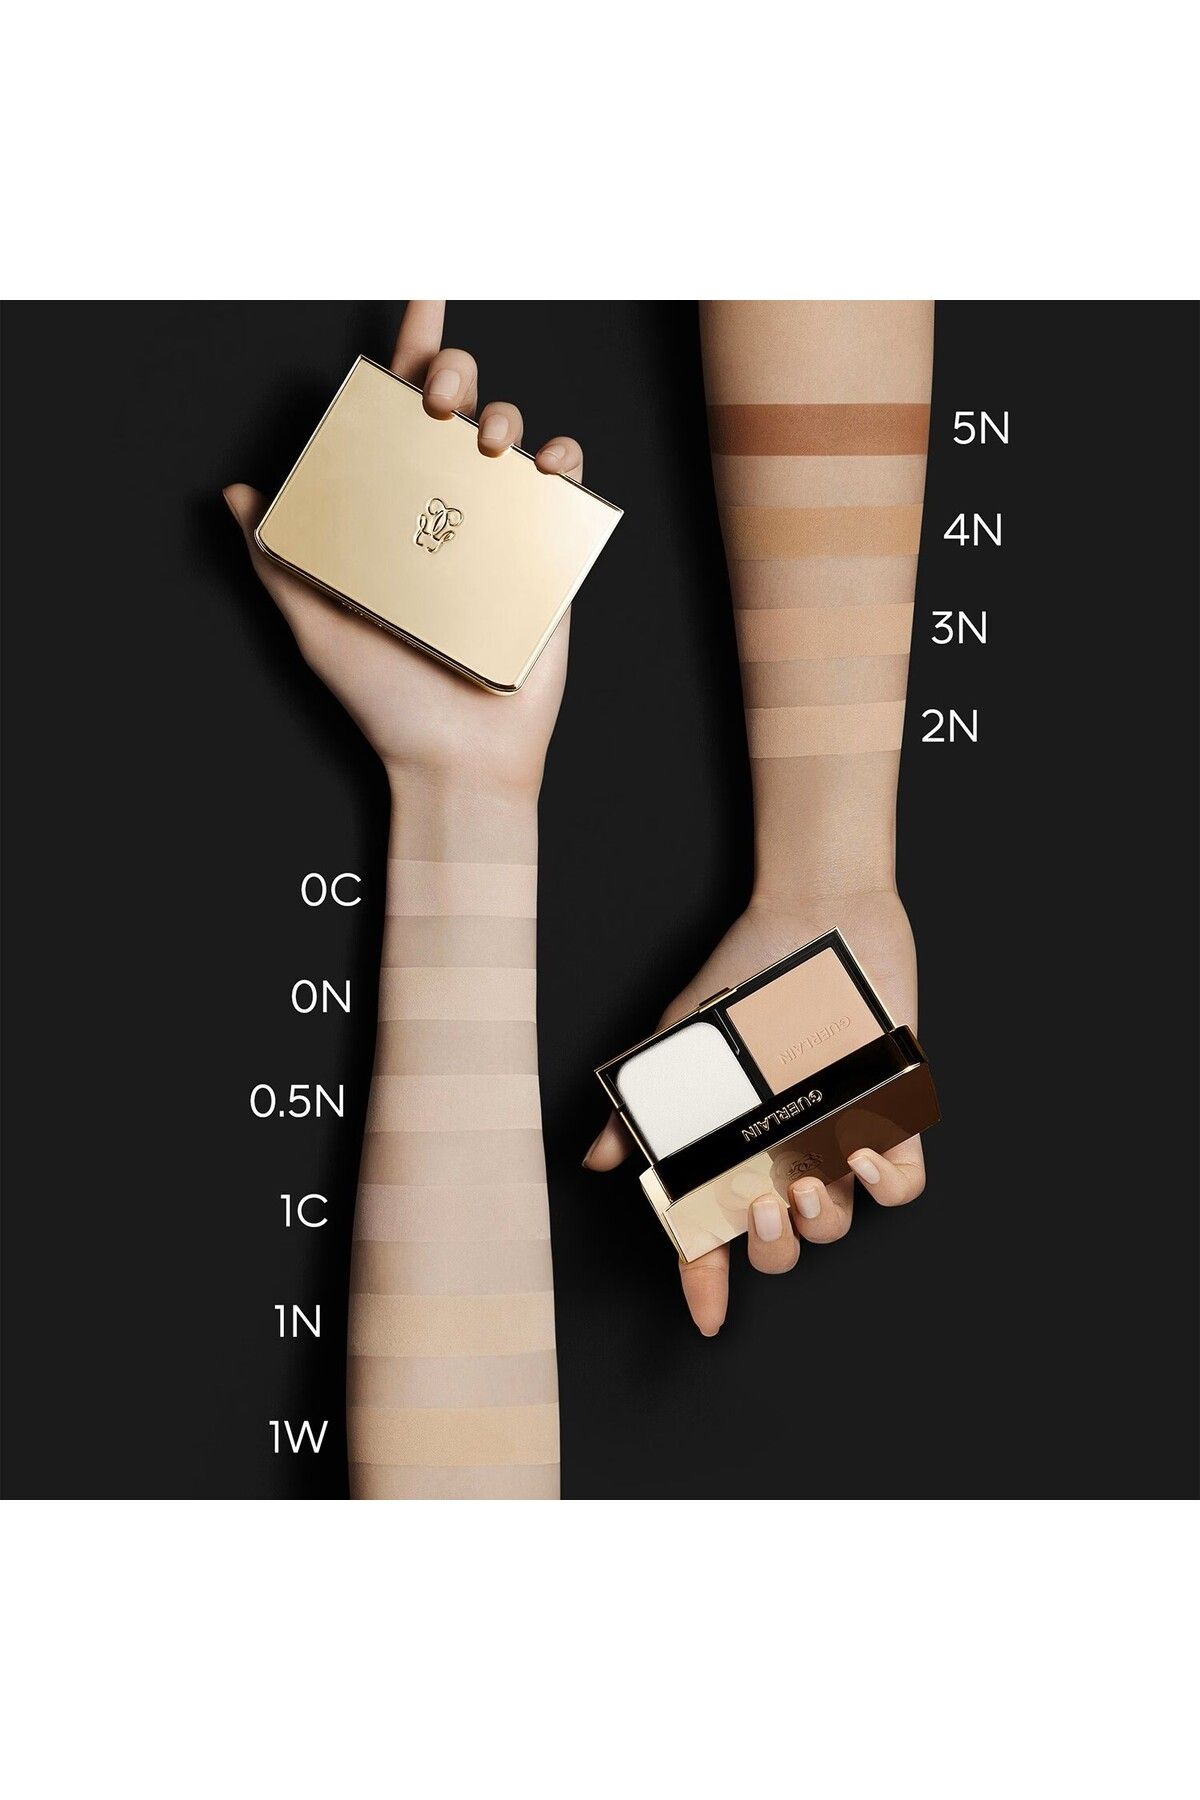 Guerlain پنکک Parure Gold Skin Control صاف کننده ماندگاری 24 ساعته و بازسازی کننده پوست شماره رنگ تیره